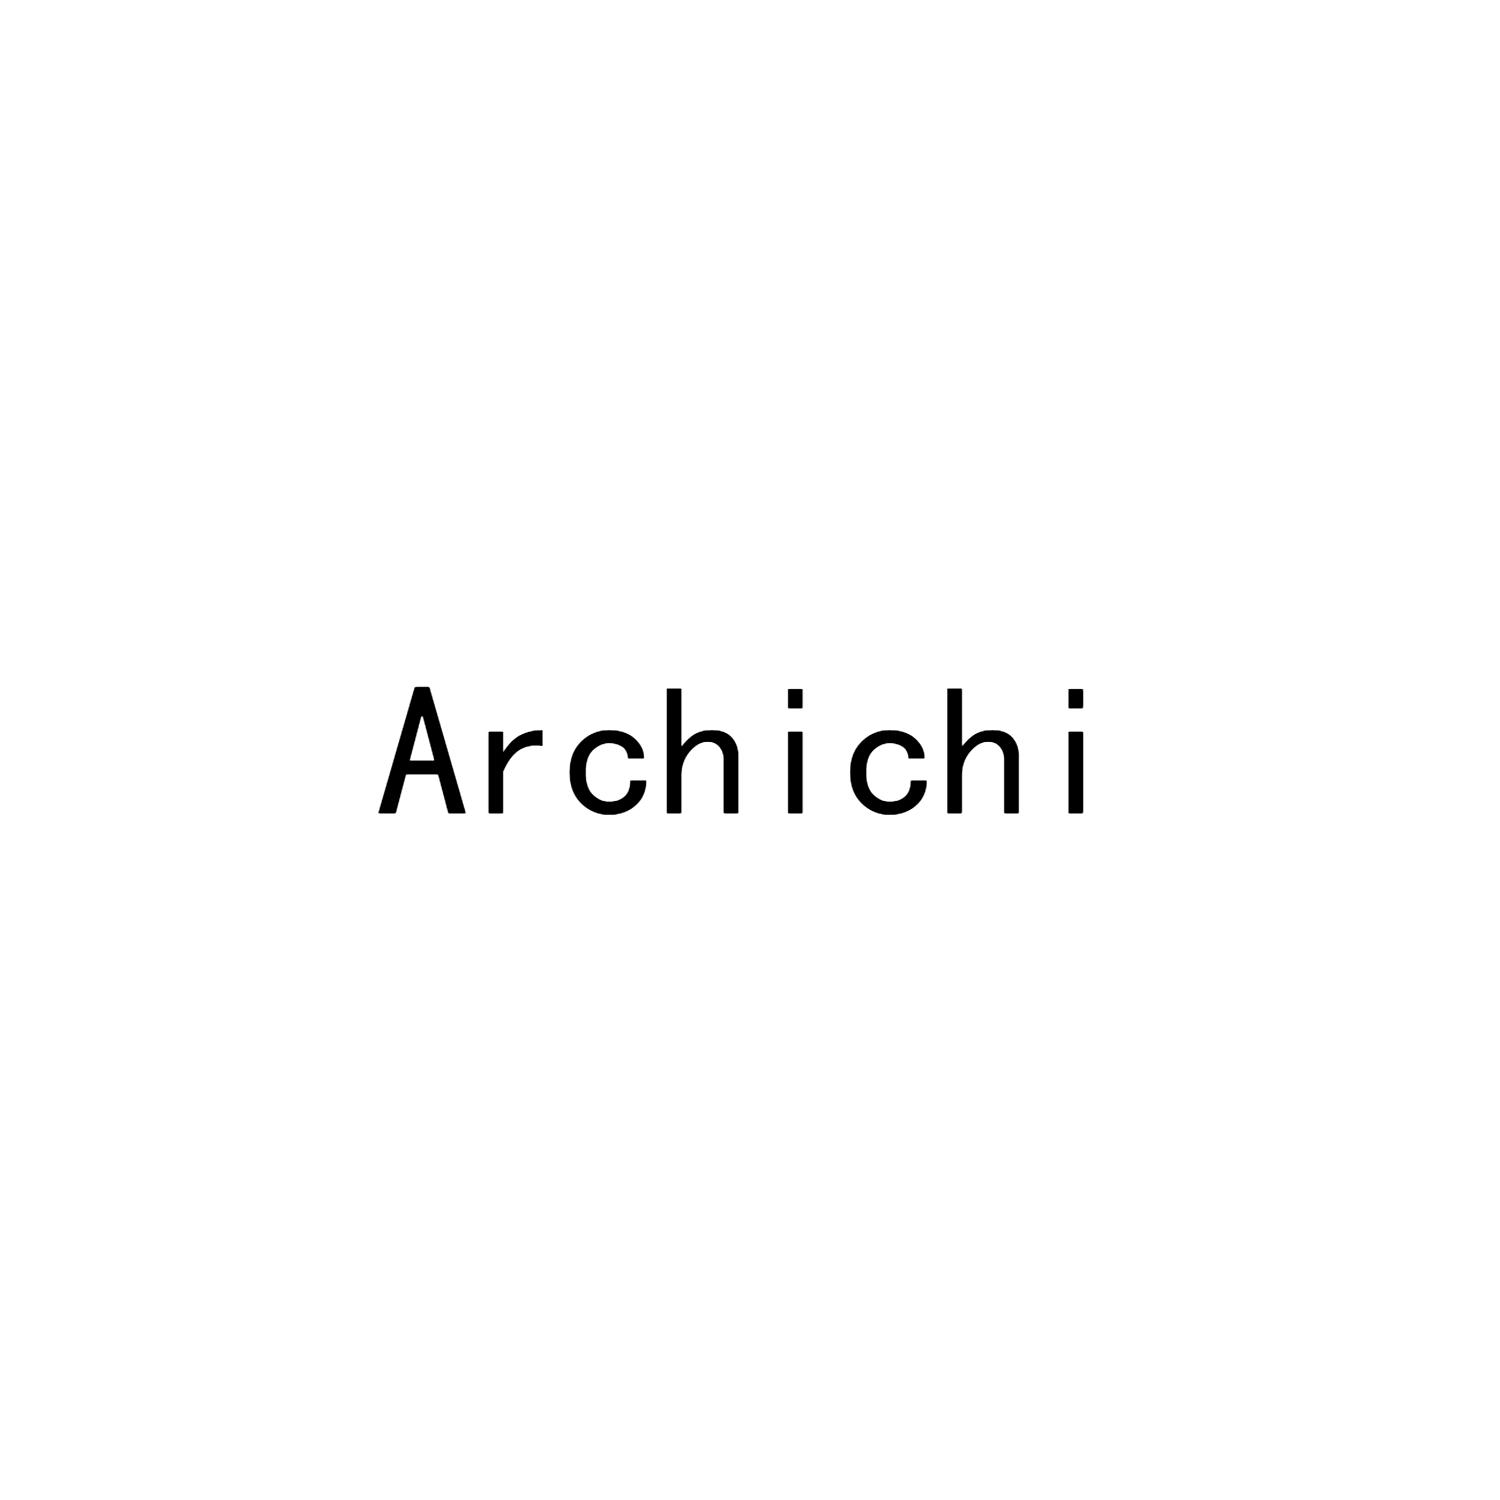 ARCHICHI商标转让